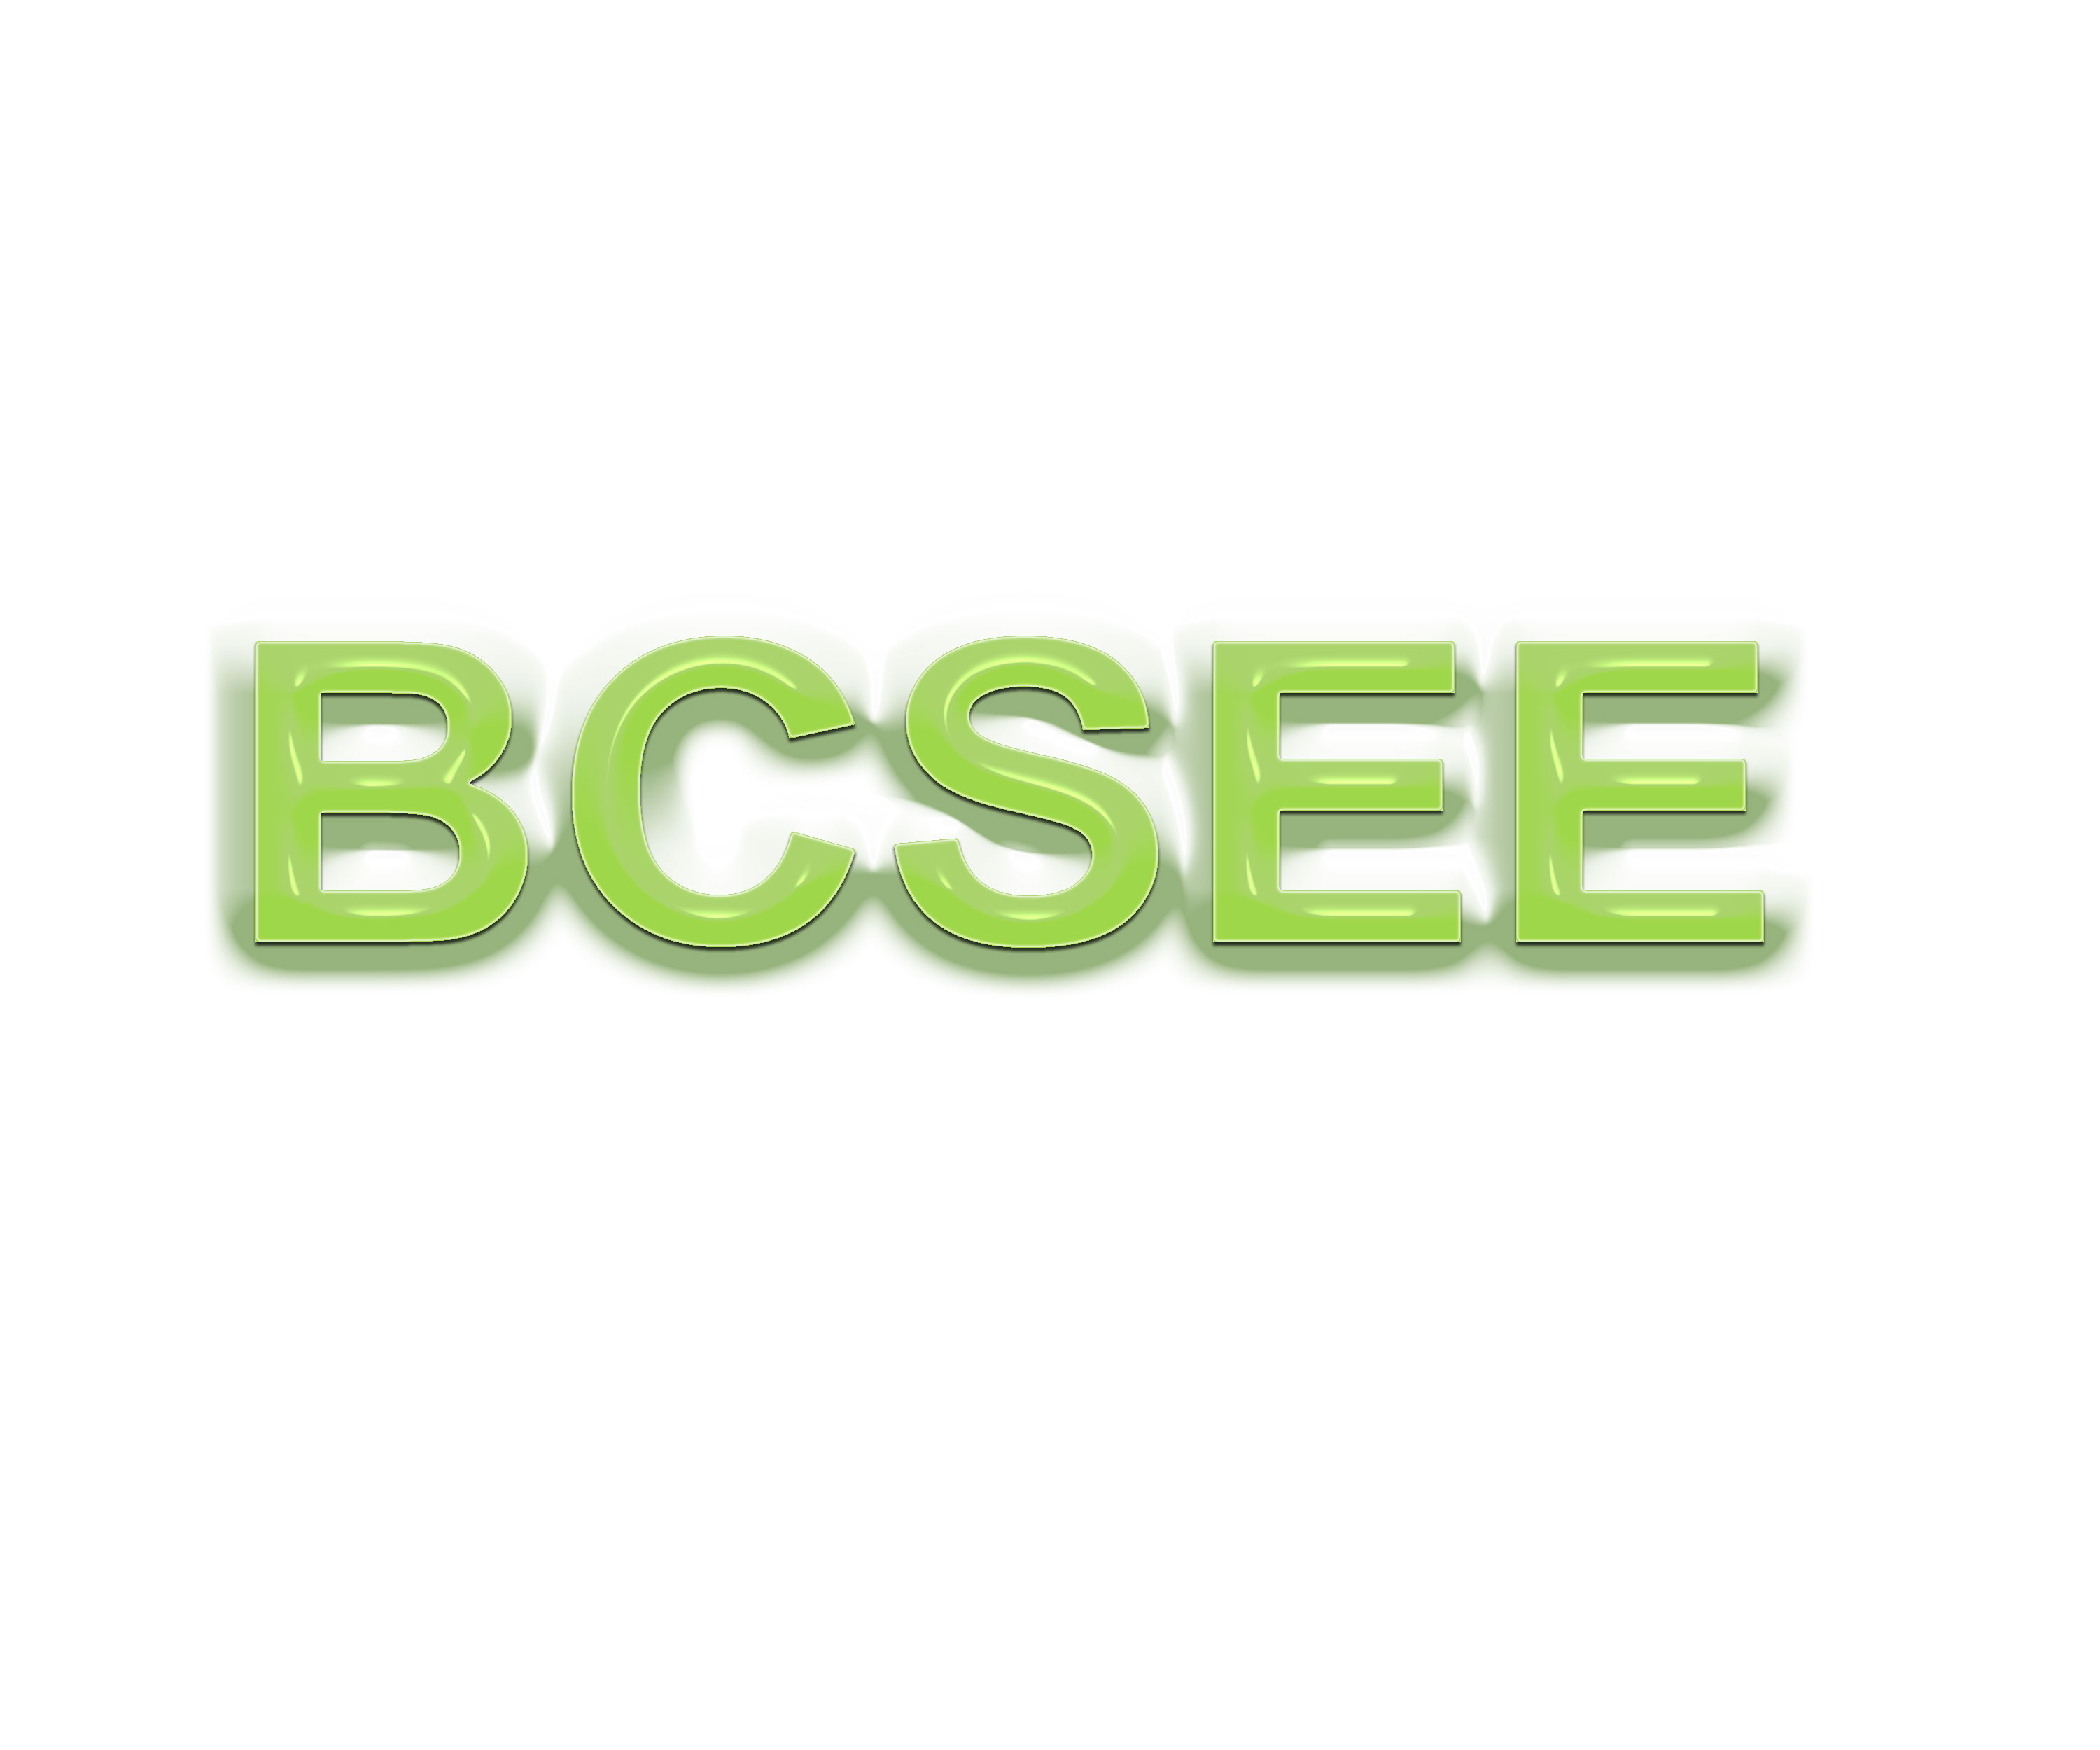 BCSEE Electronics Limited 